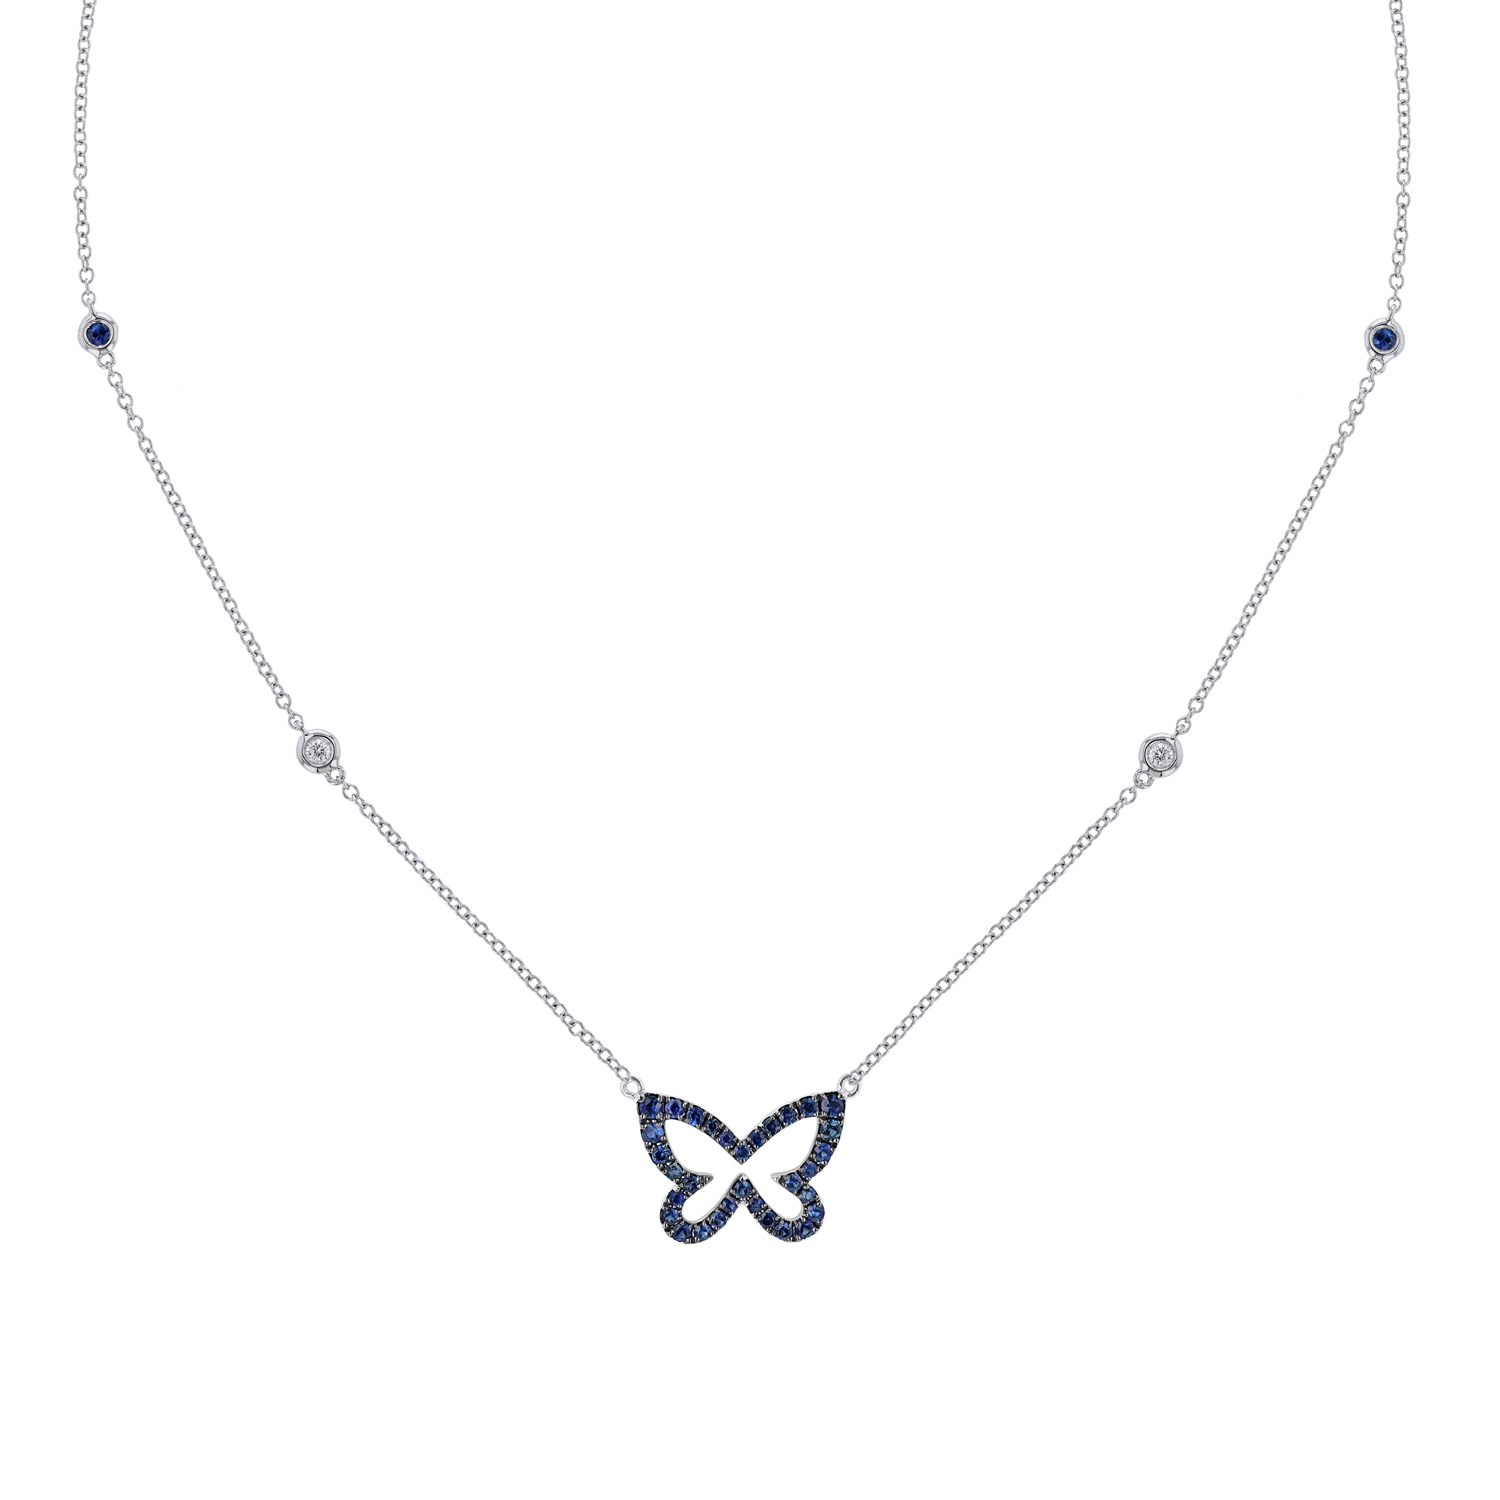 Mini London Blue Topaz Butterfly Necklace with Diamonds - KAMARIA